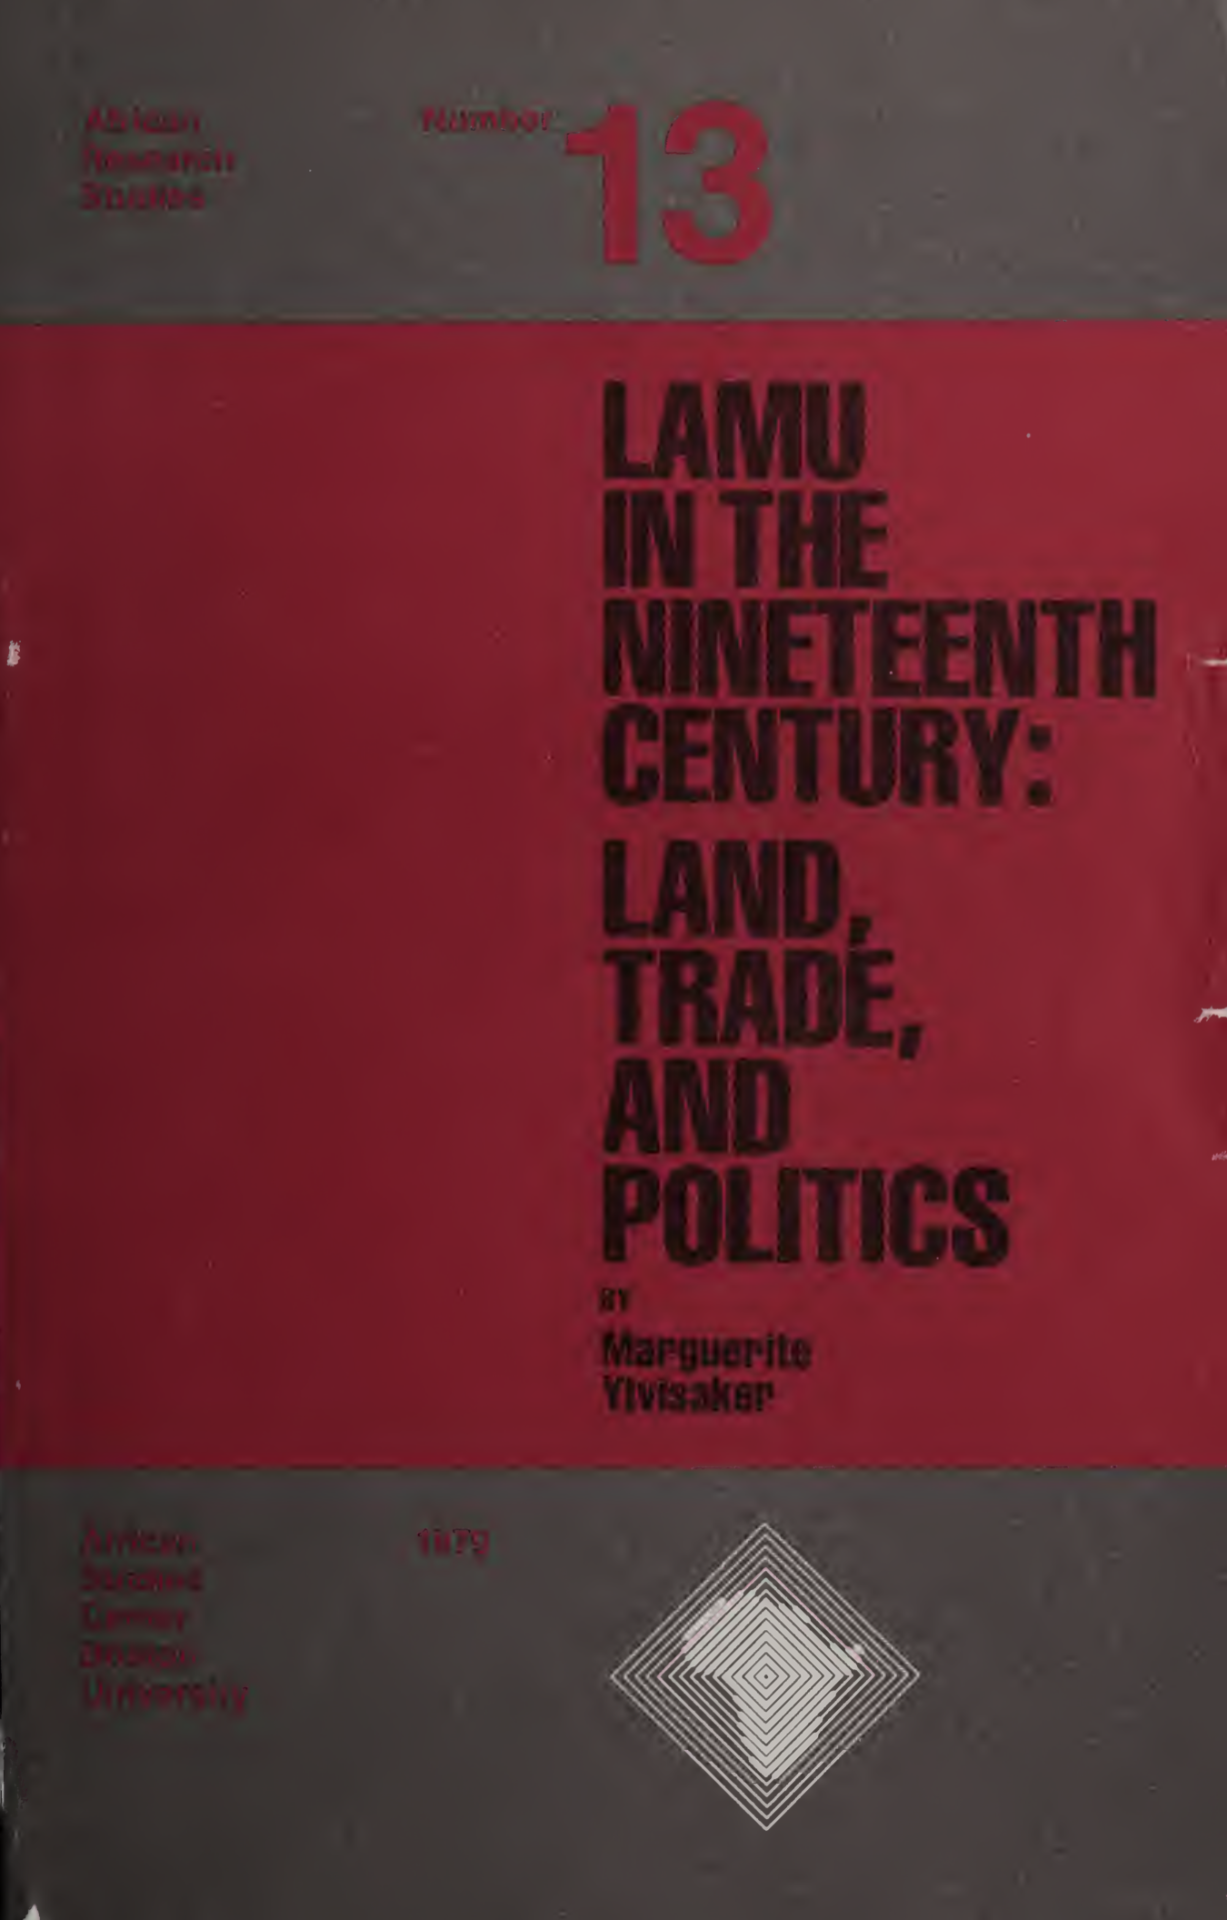 Lamu in the Nineteenth Century: Land, Trade, and Politics